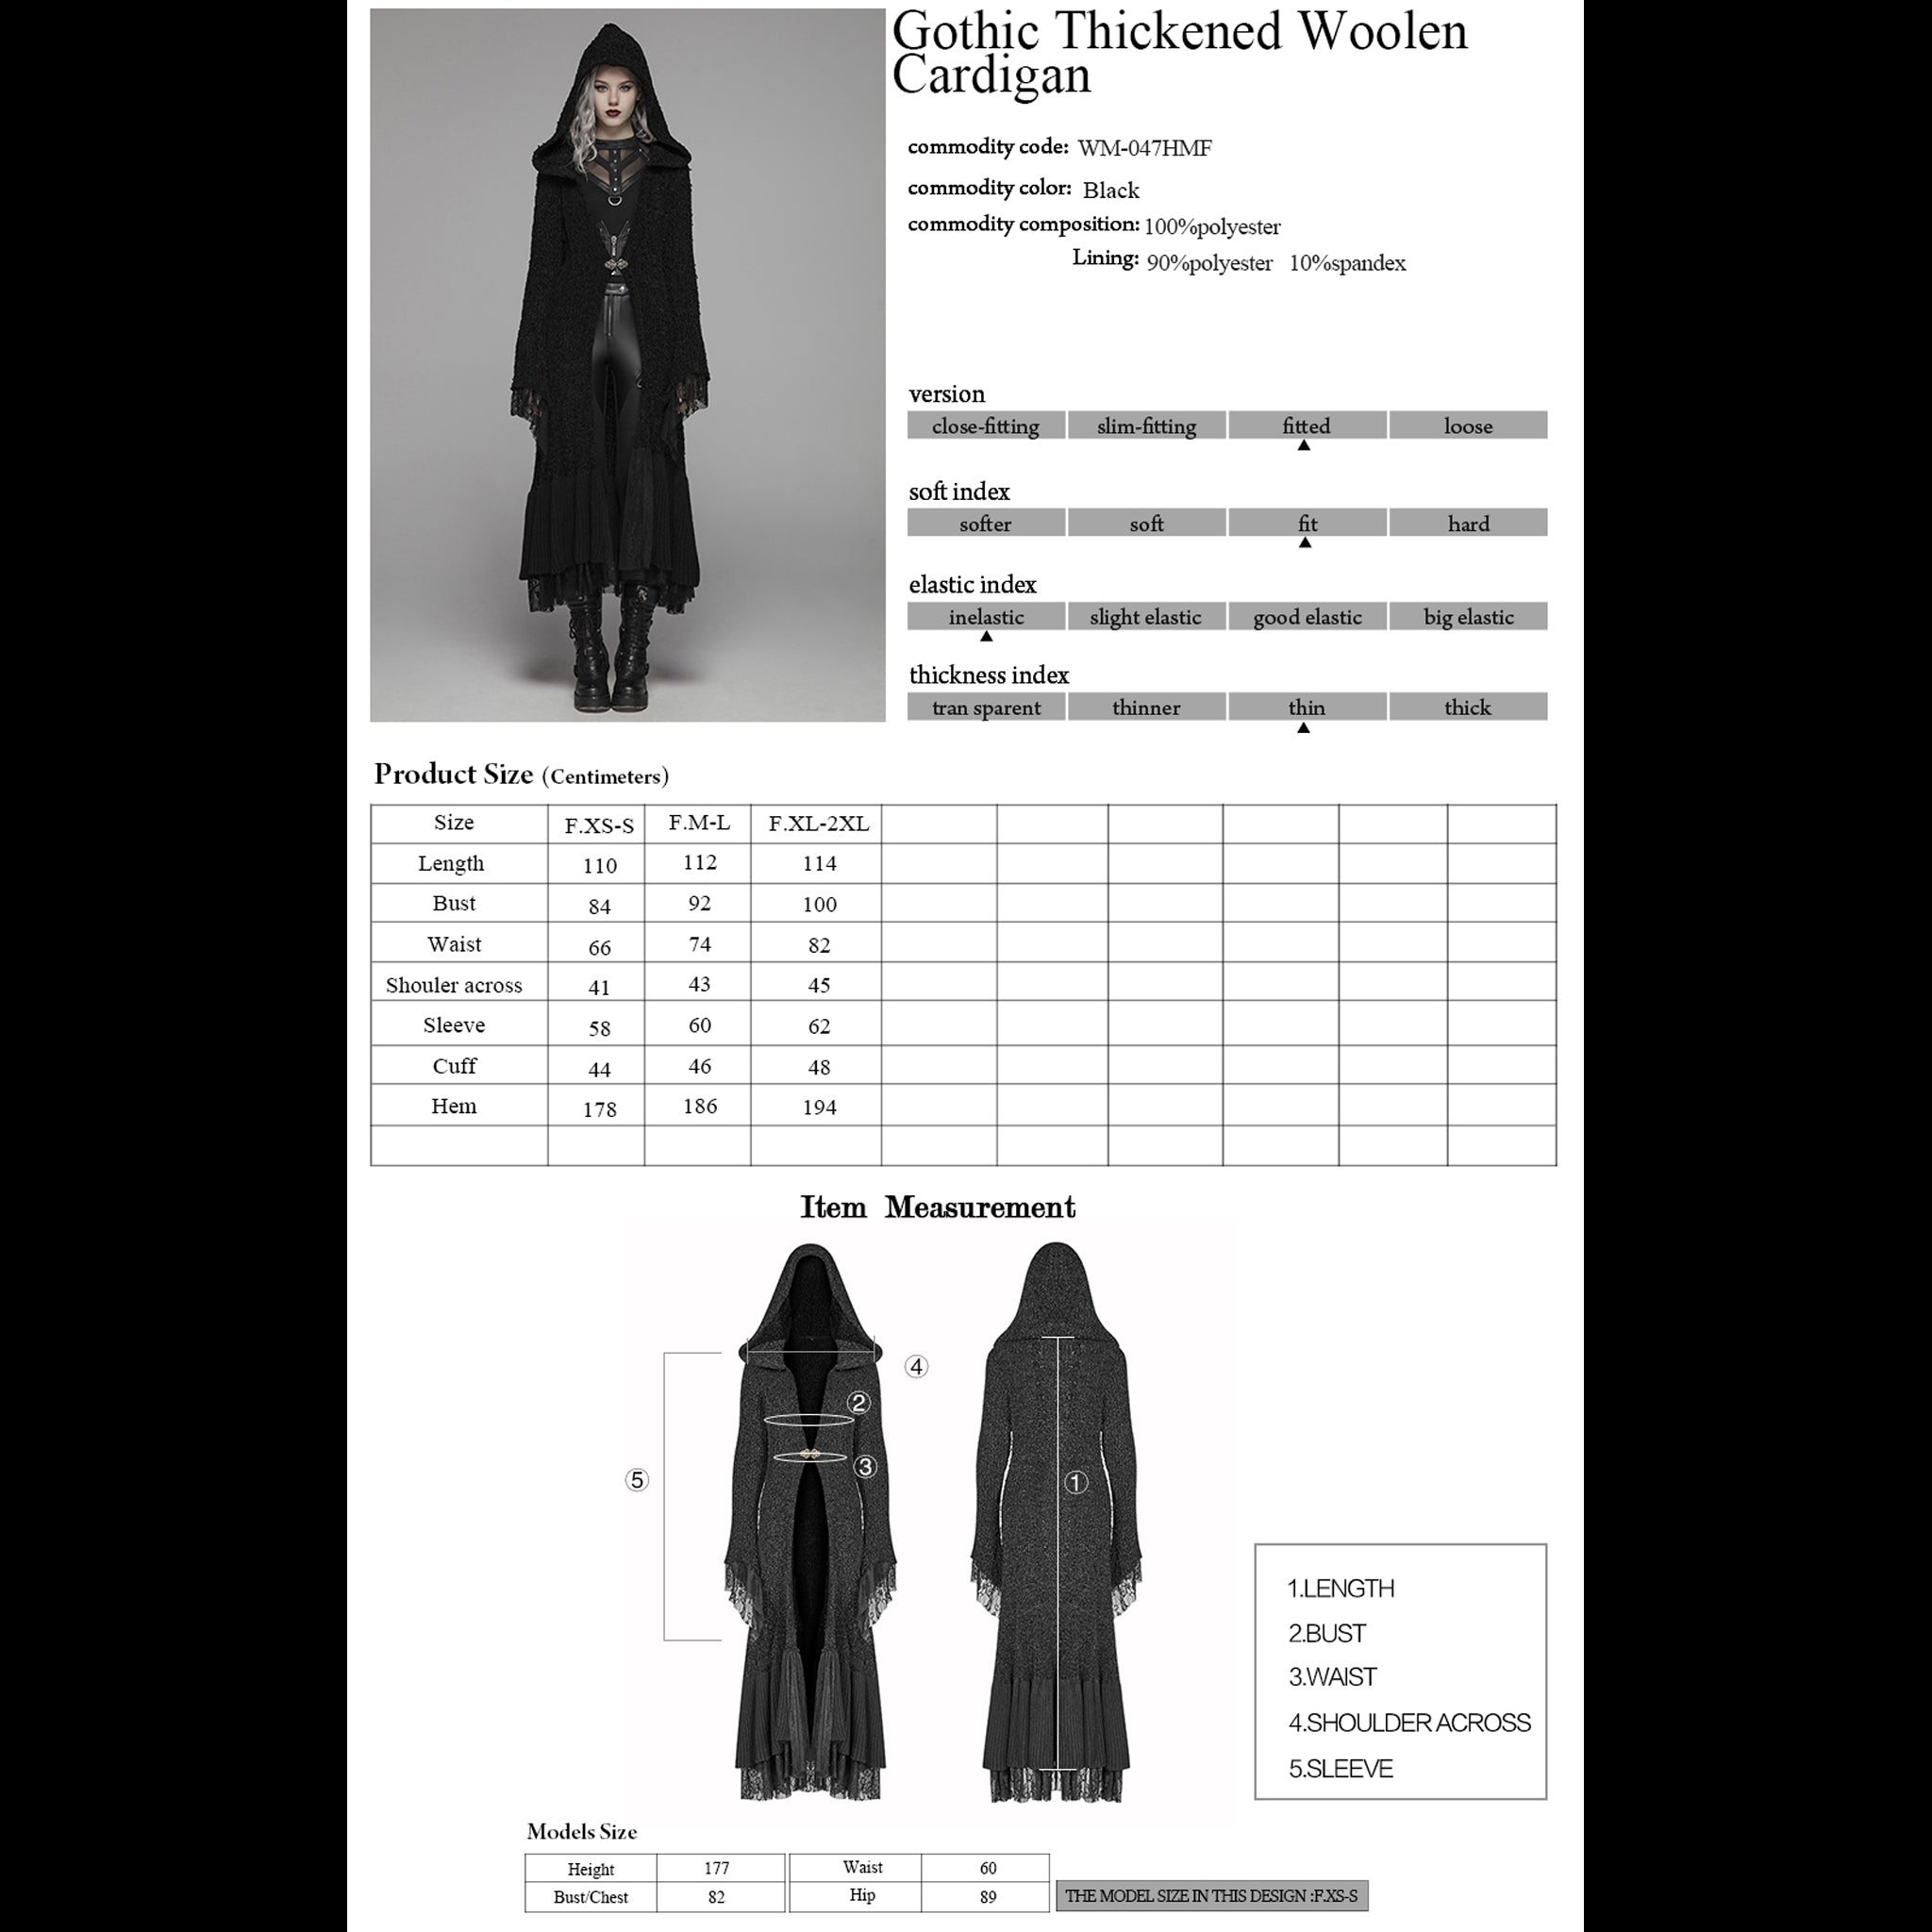 Gothic Thickened Woolen Cardigan